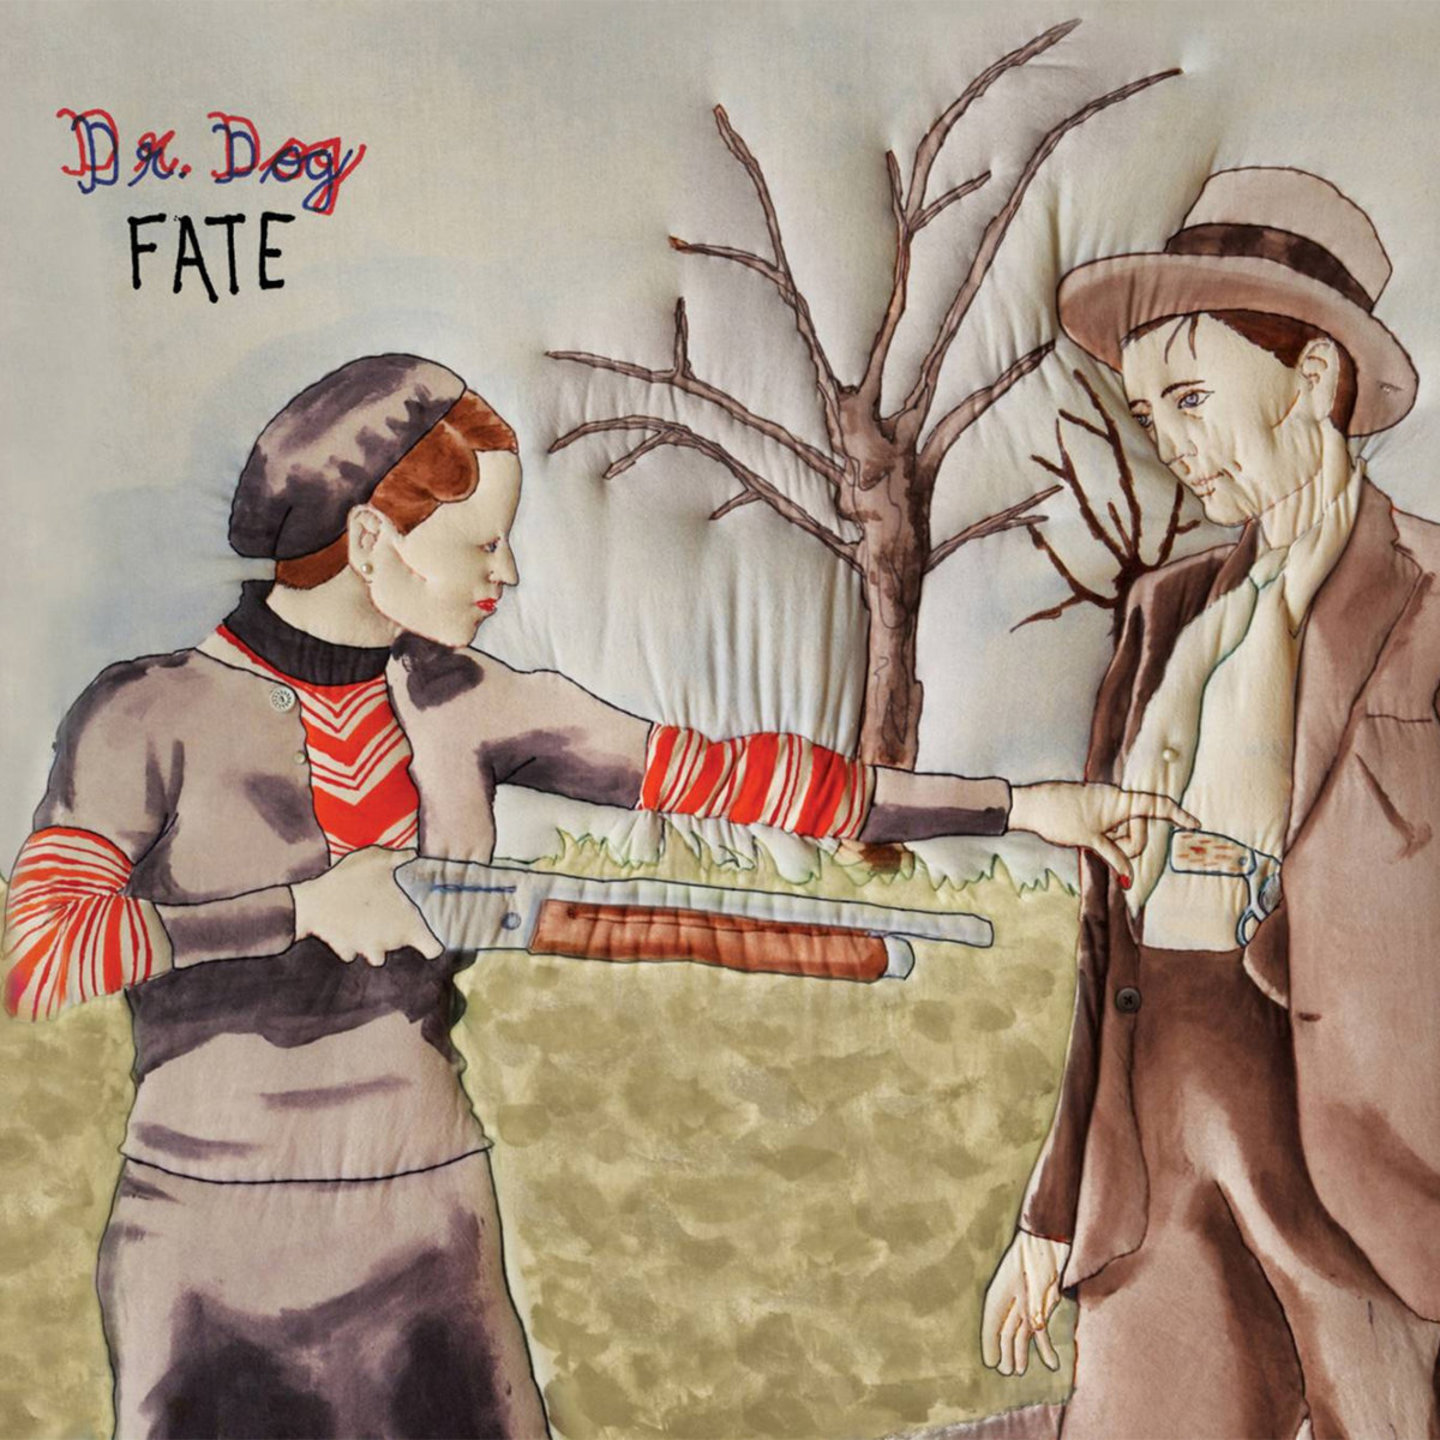 DR. DOG - Fate LP 180G